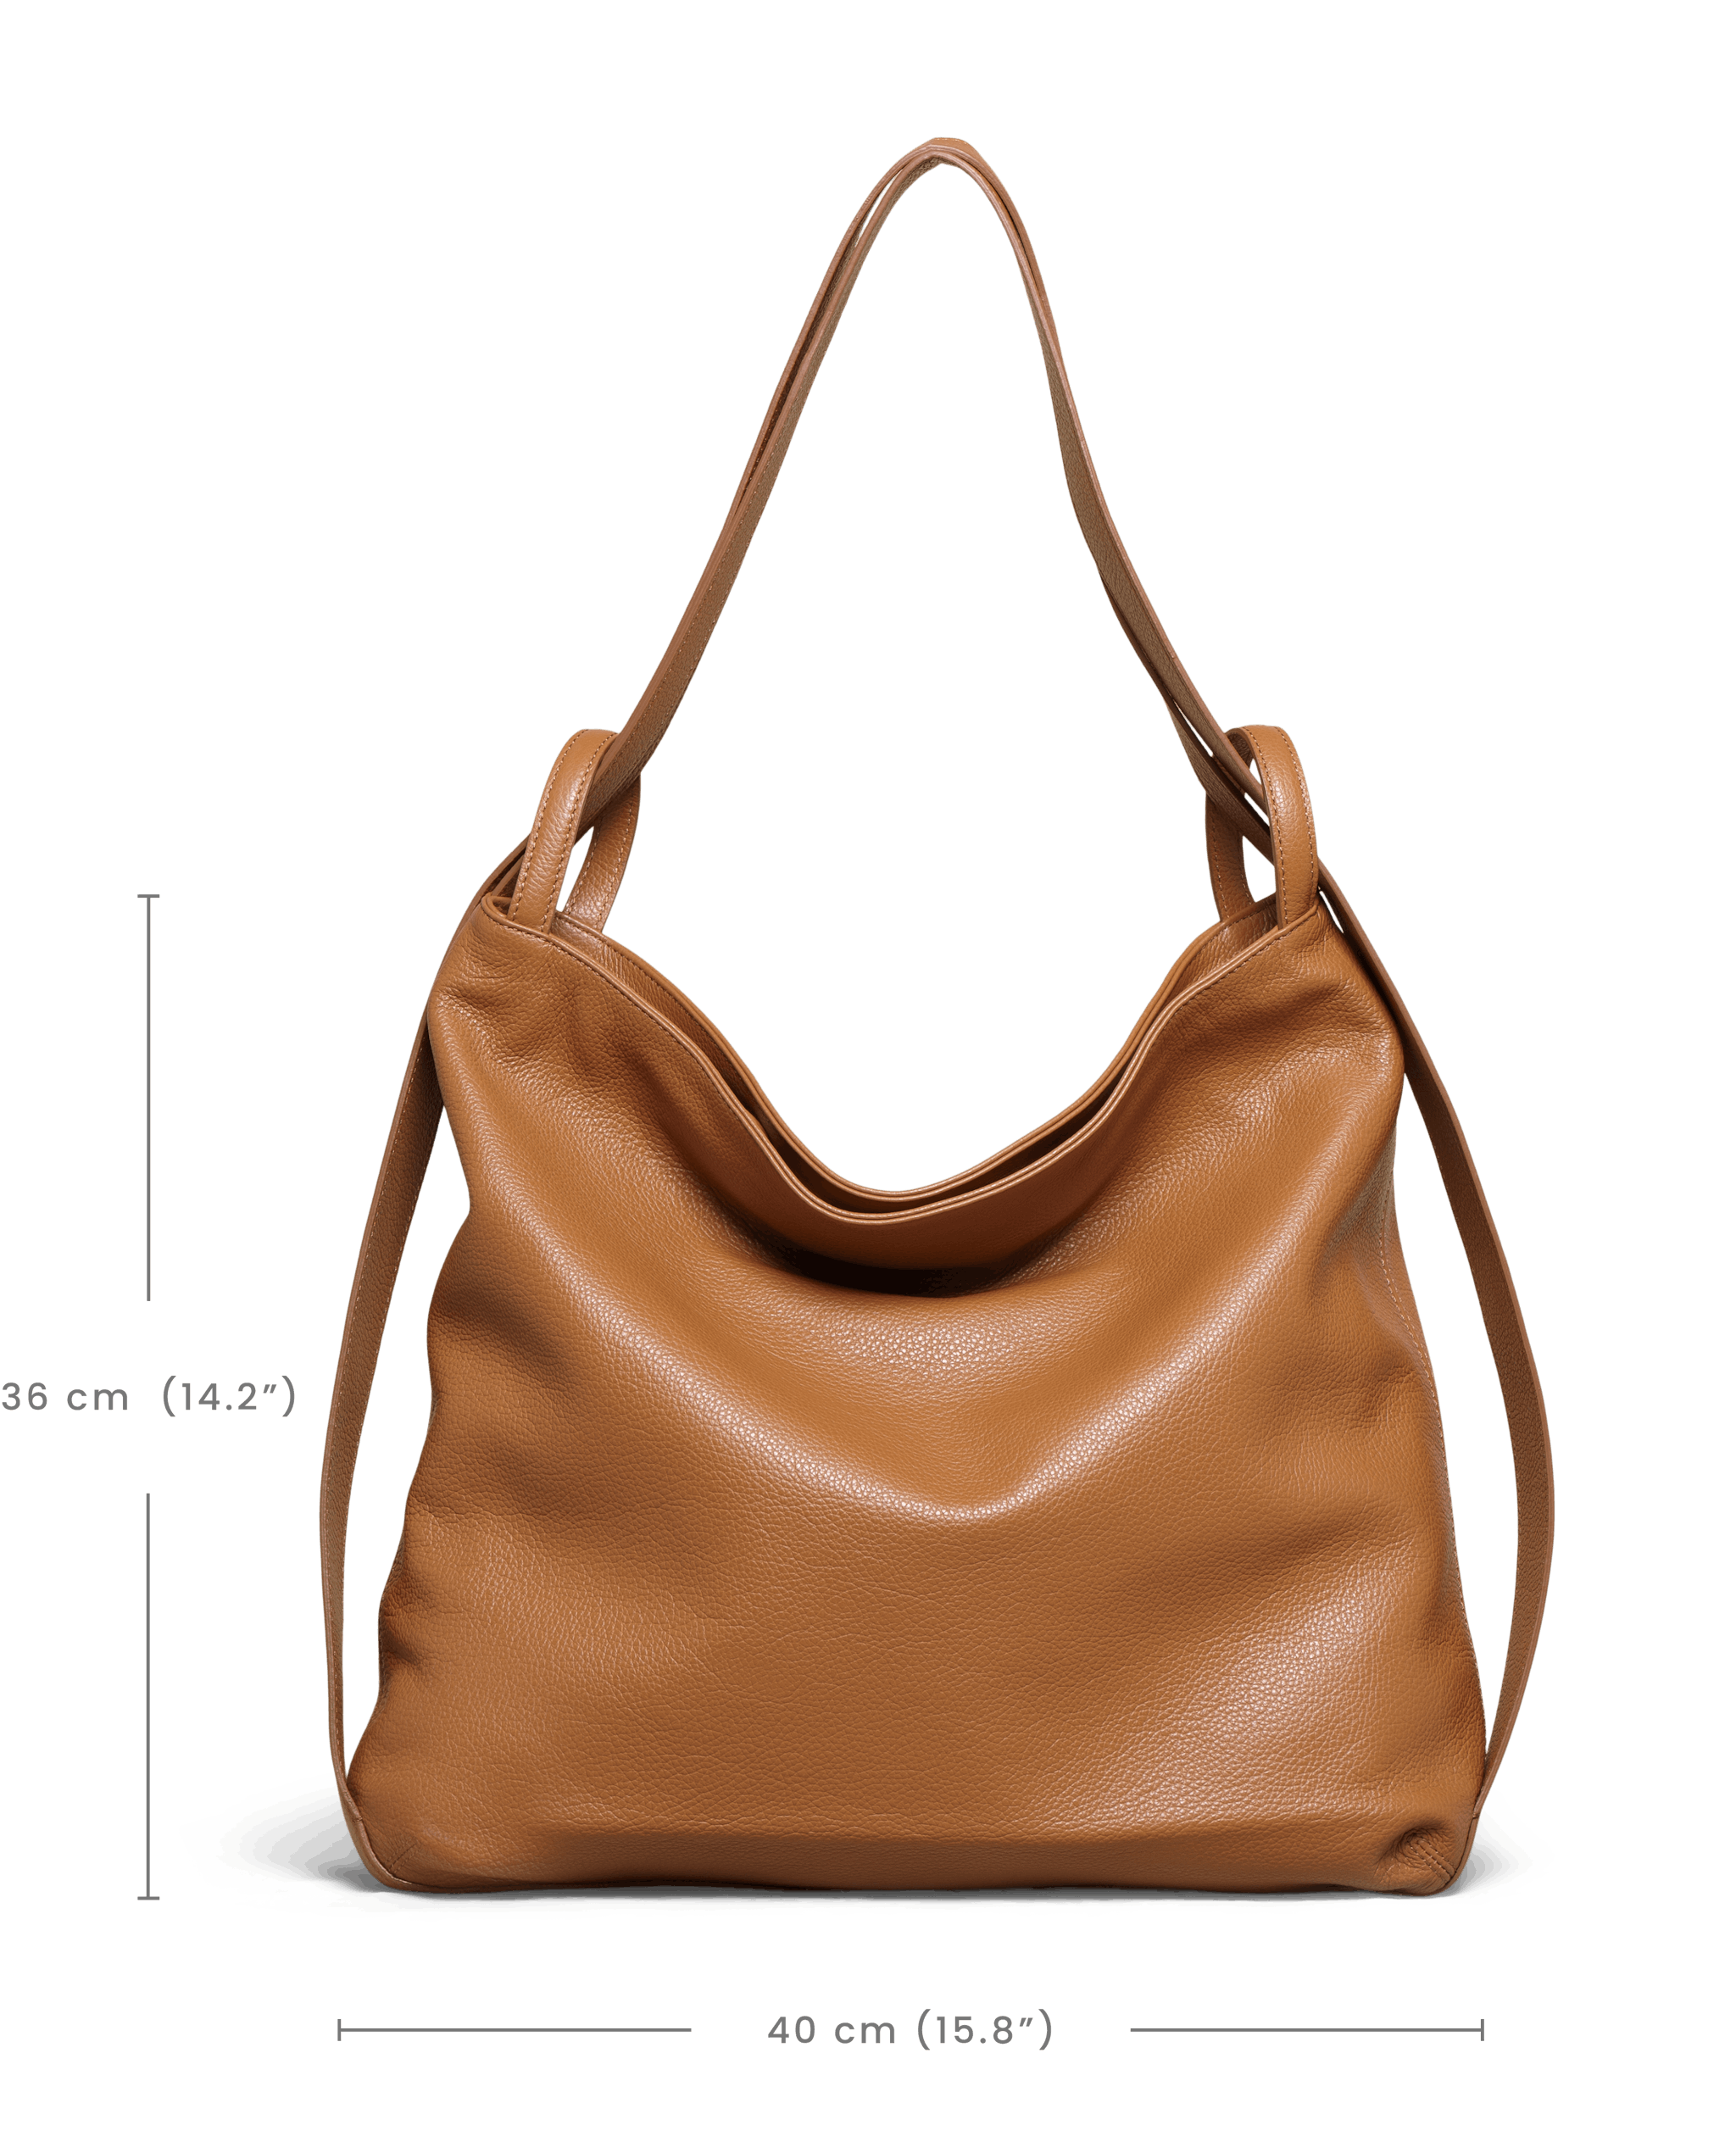 Tan Leather Bag Women Soft Leather Messenger Bag SALE Tan 